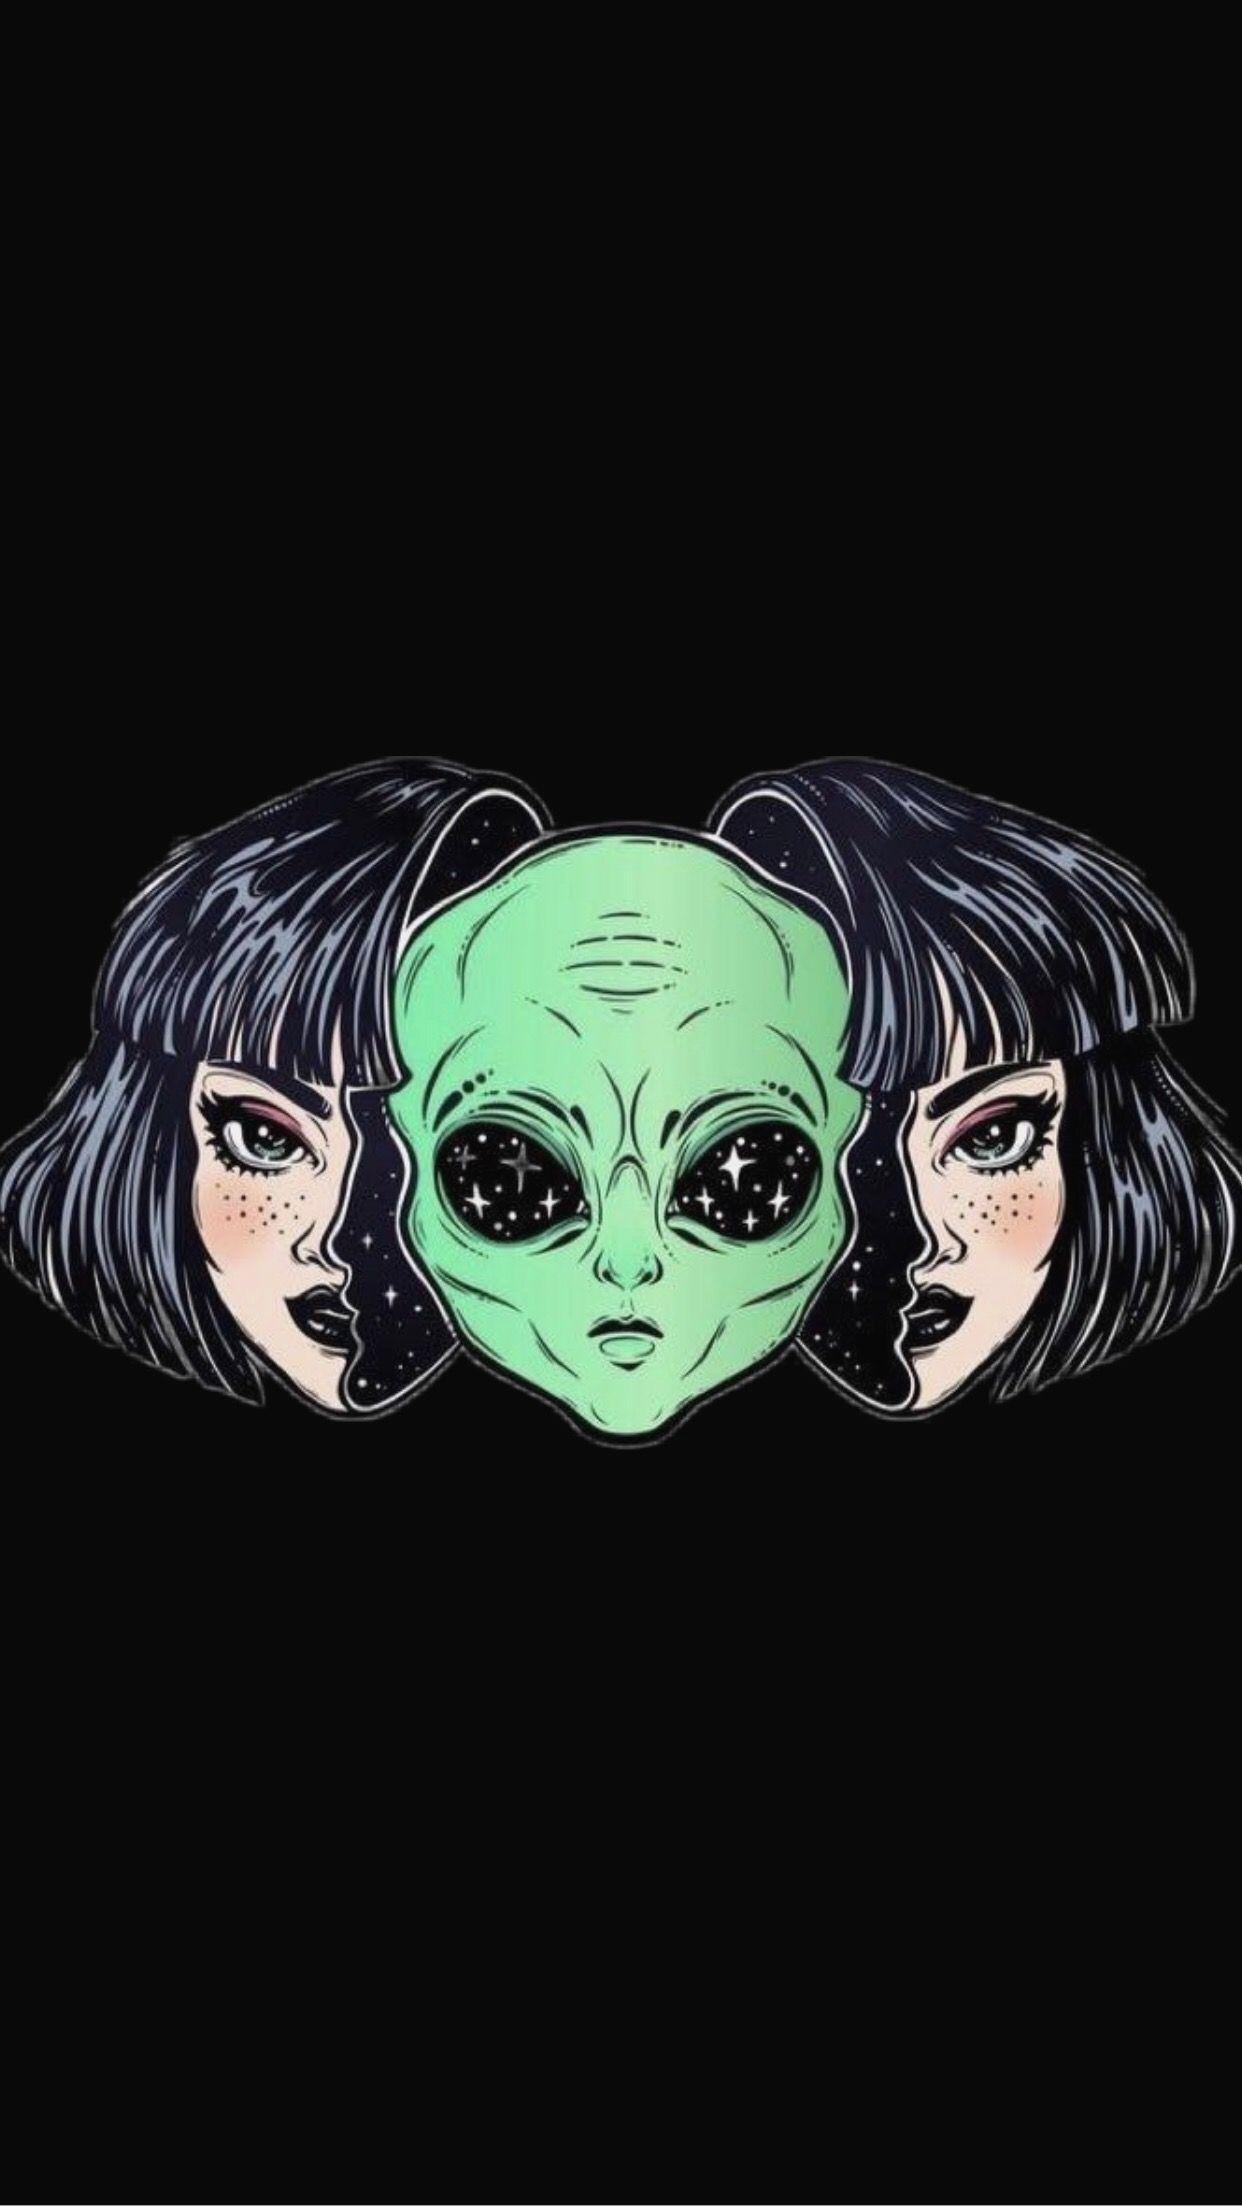 Alien Vaporwave Aesthetic Wallpapers - Top Free Alien Vaporwave